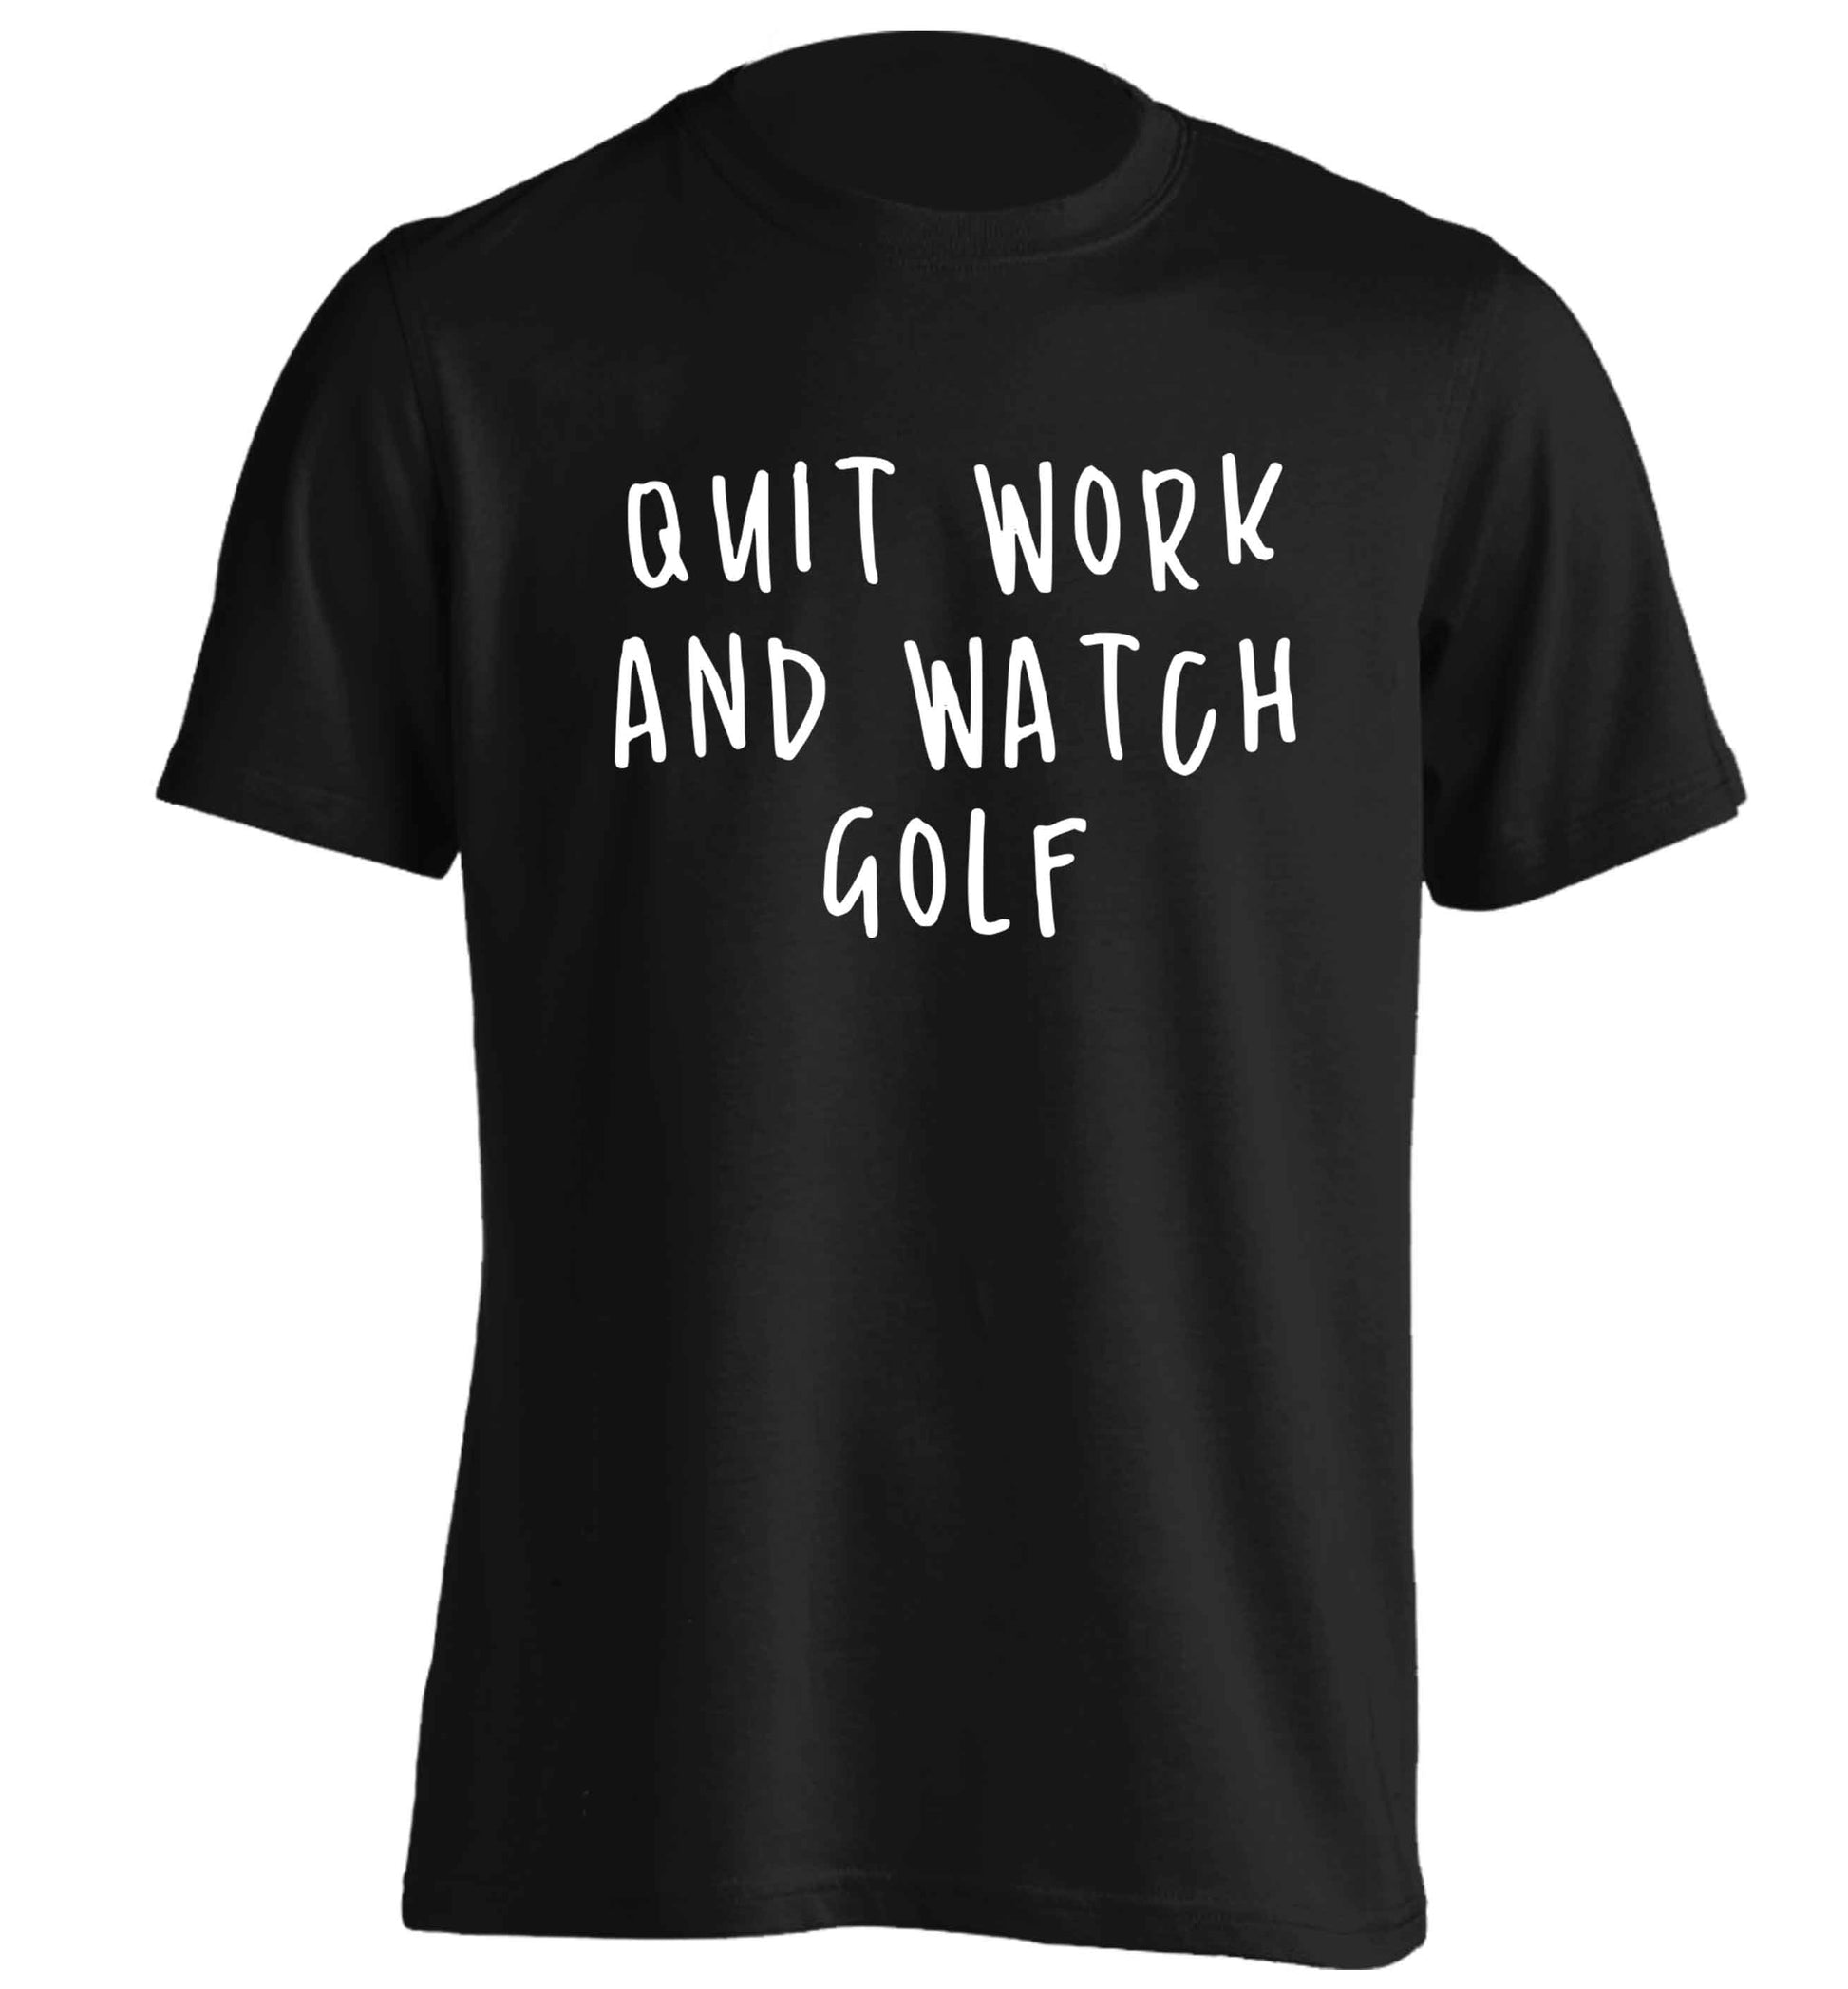 Quit work and watch golf adults unisex black Tshirt 2XL